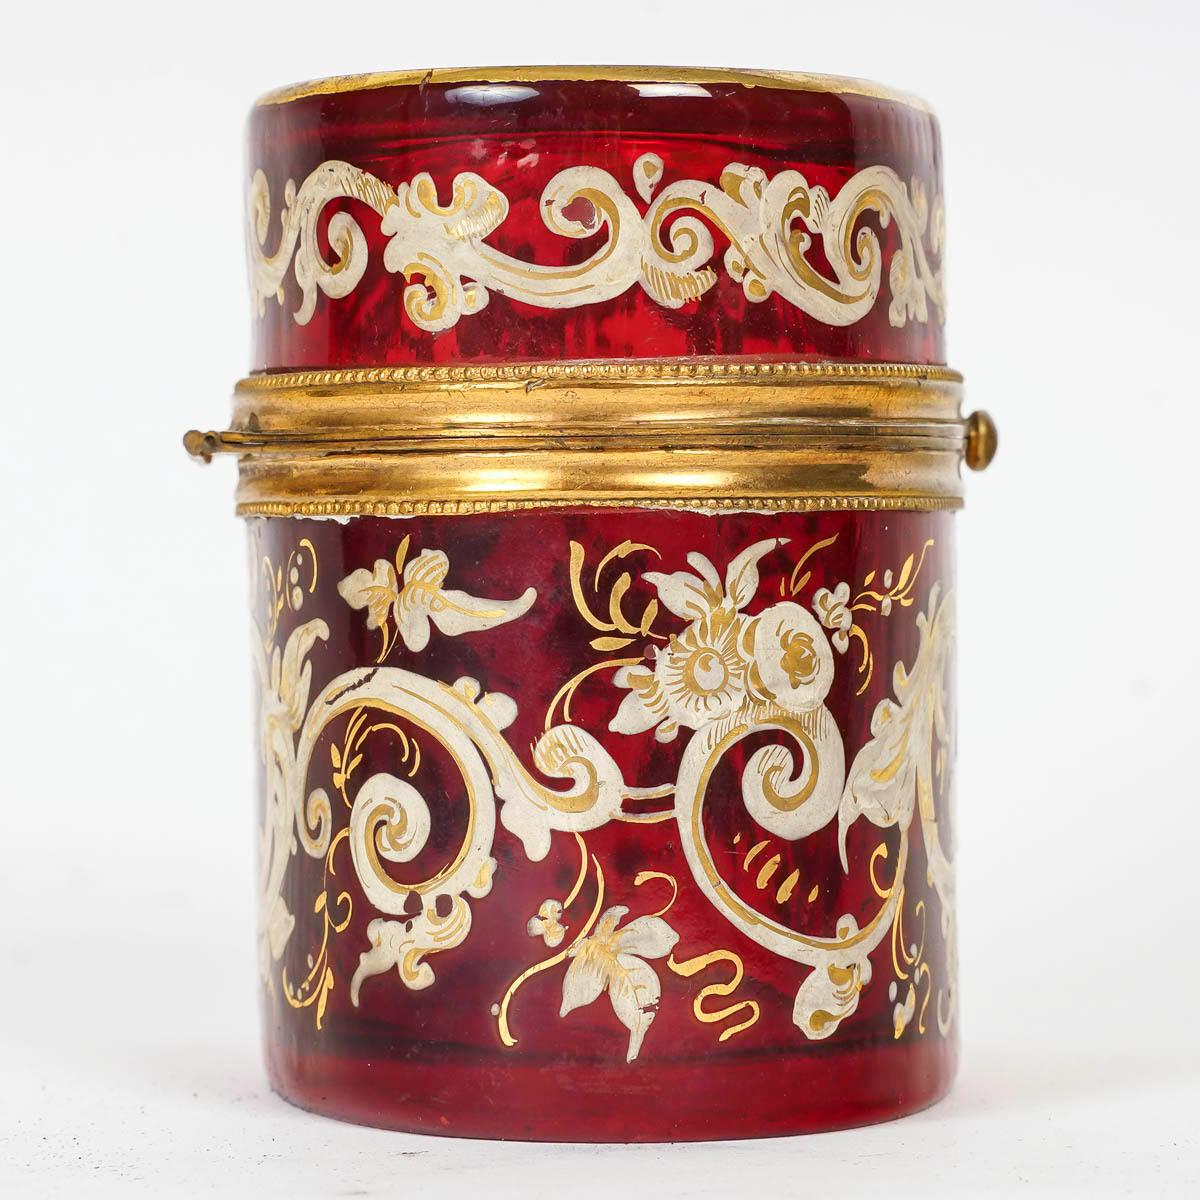 Laiton Boîte en cristal émaillé de Bohême rouge, XIXe siècle, période Napoléon III. en vente